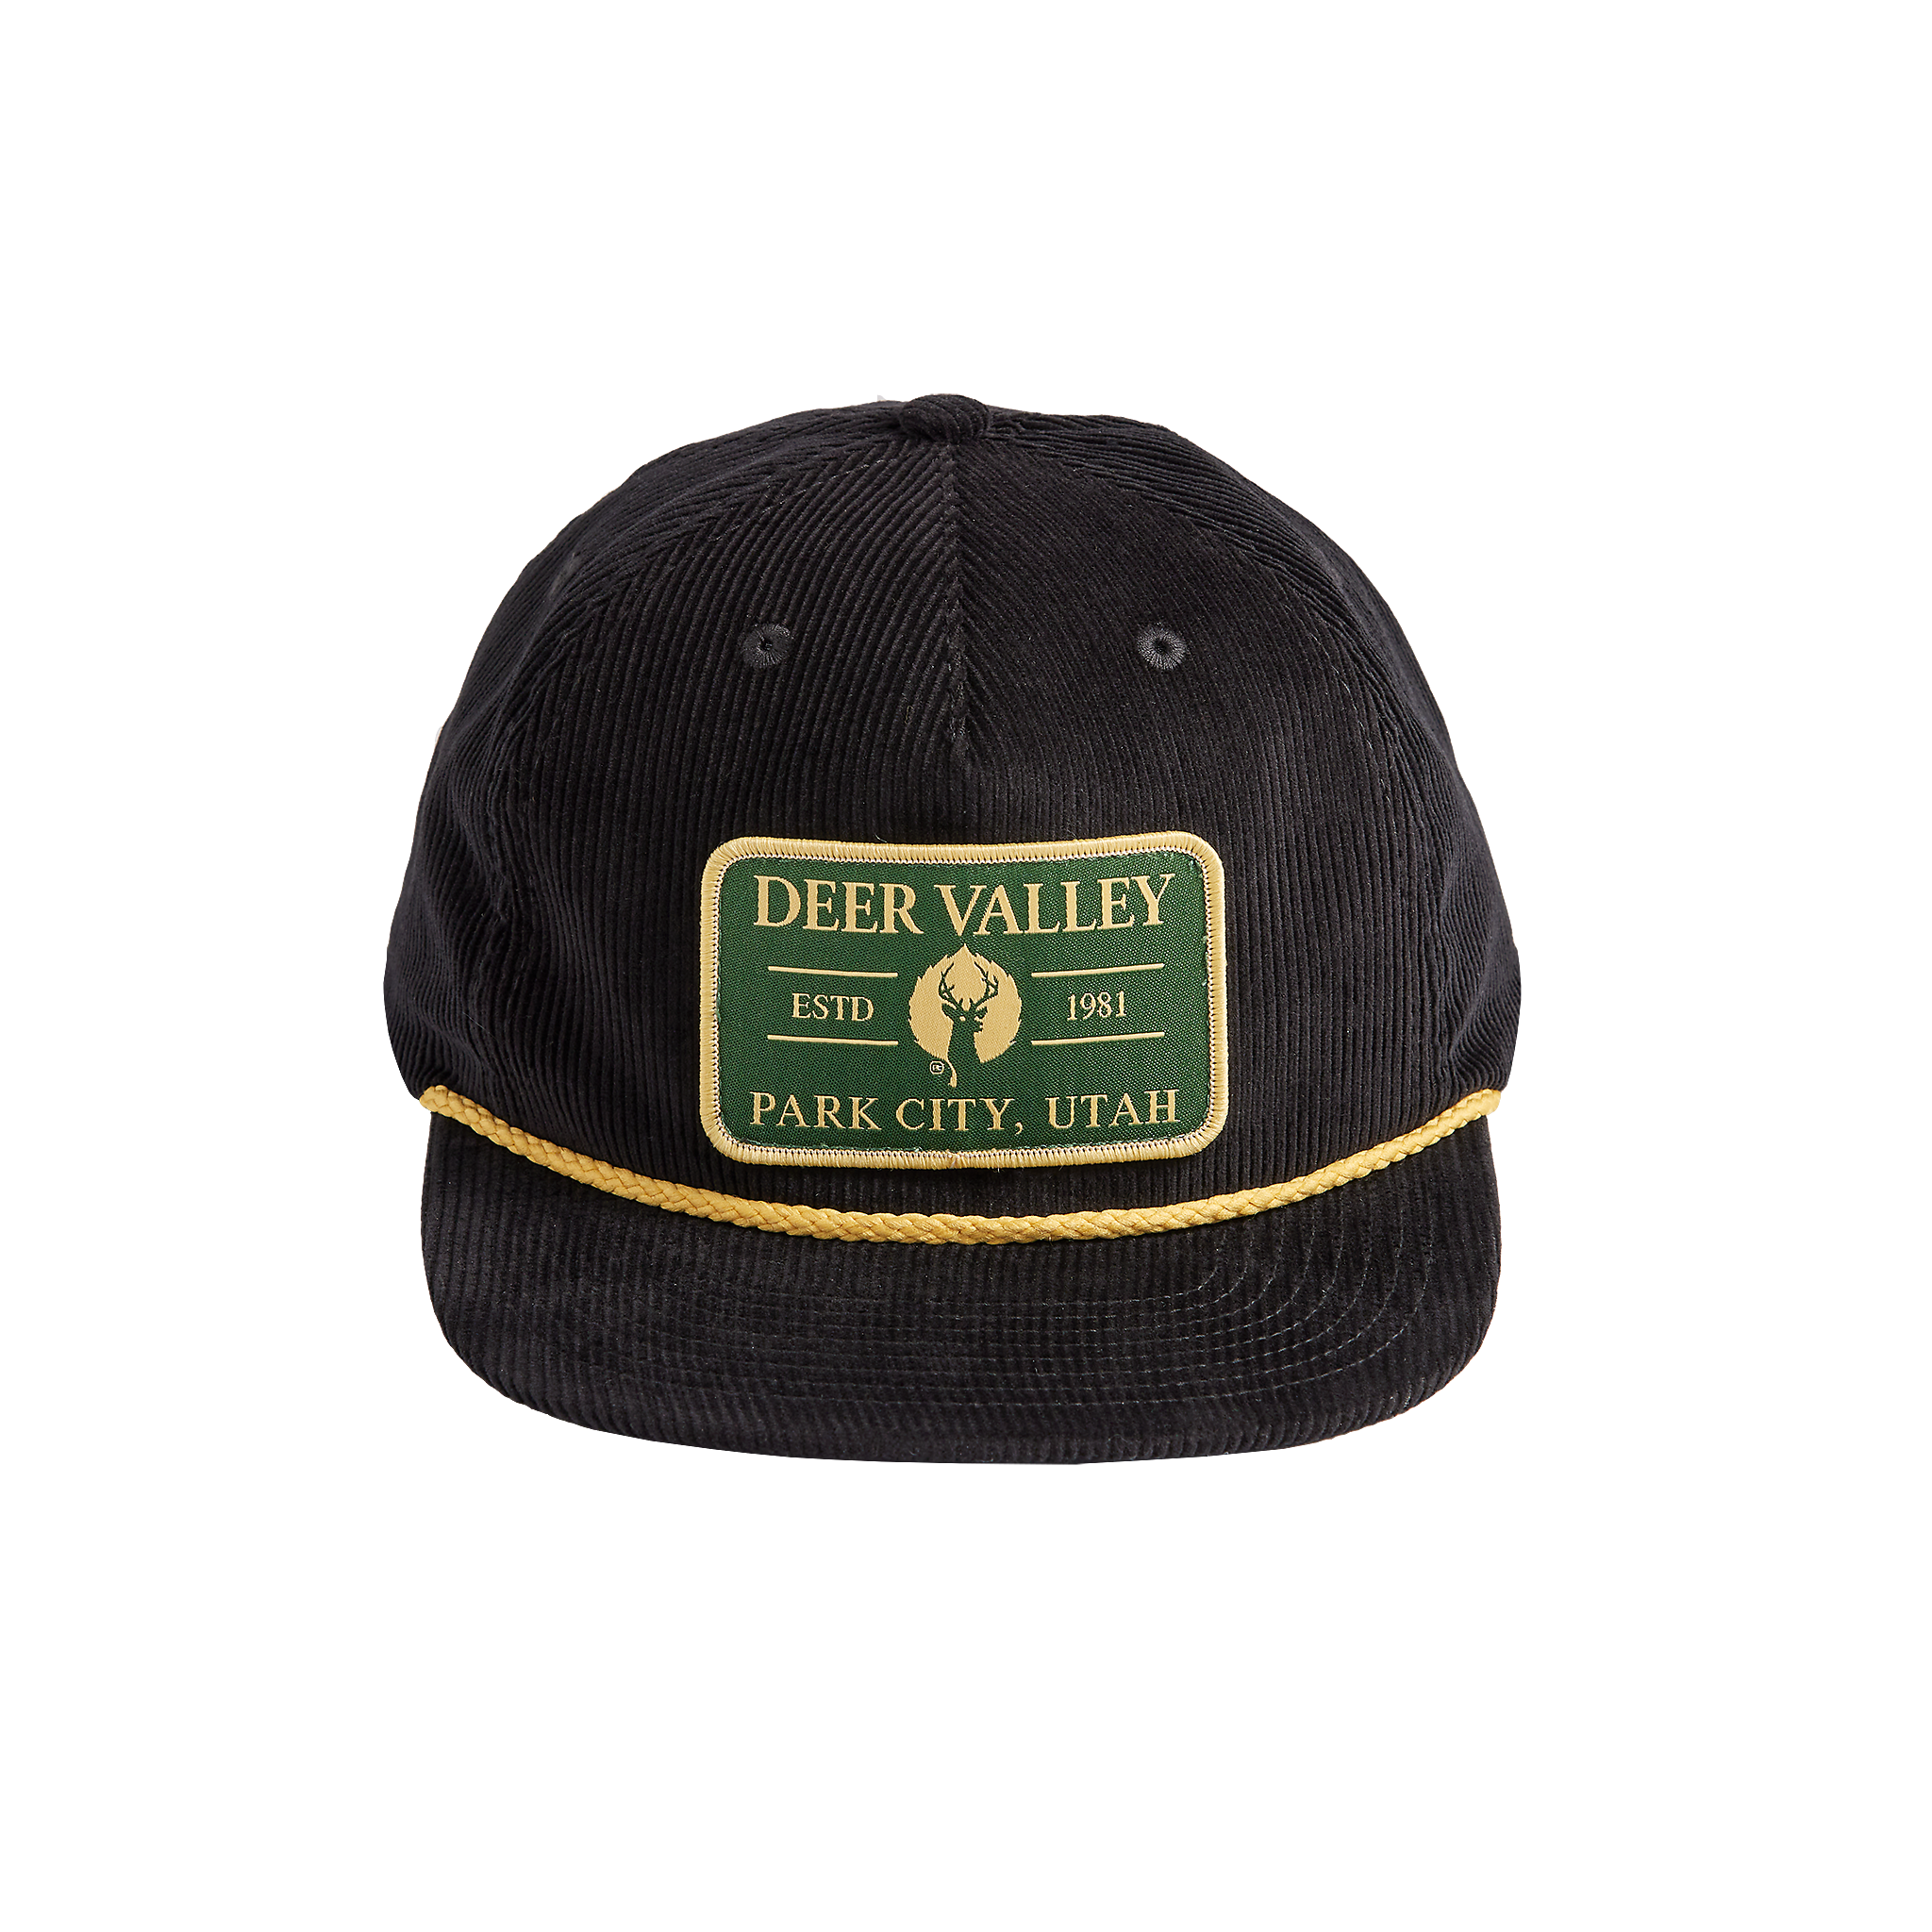 Black corduroy cap with golden rope across brim and adjustable snapback